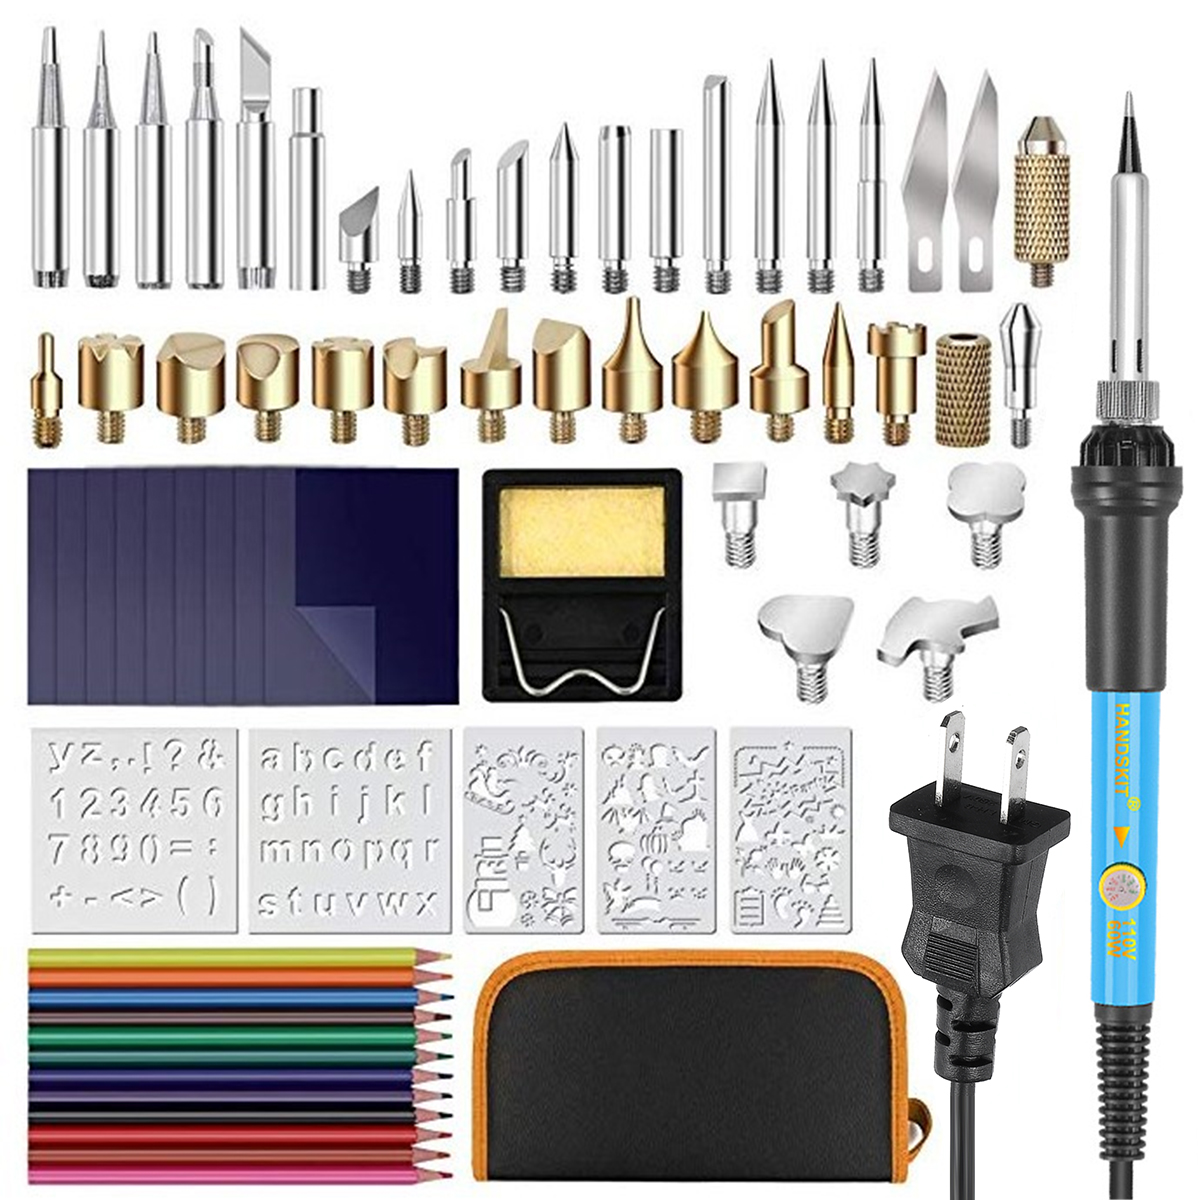 72pcs-Wood-Burning-Pen-Set-Tips-Stencil-Soldering-Tools-Pyrography-Crafts-Kit-Soldering-Iron-Kit-1549259-1